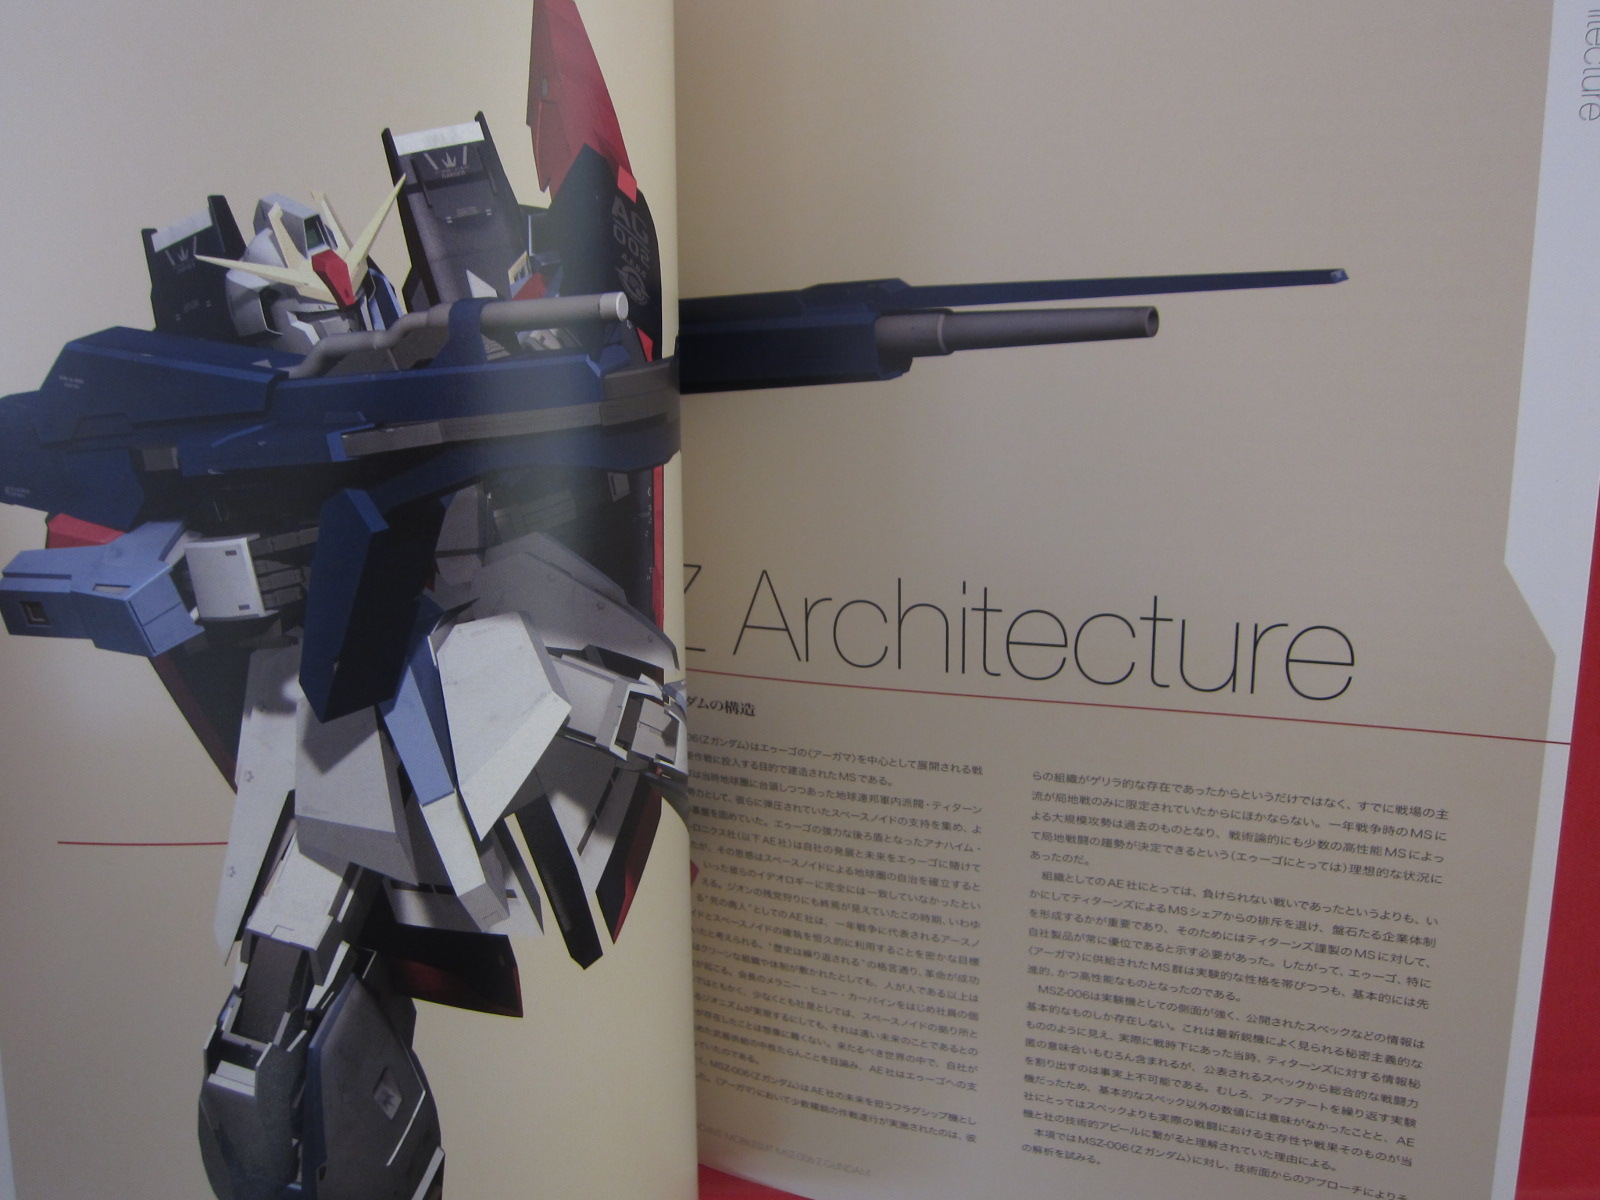 Master Archive Mobile Suit MSZ-006 Z Gundam art book